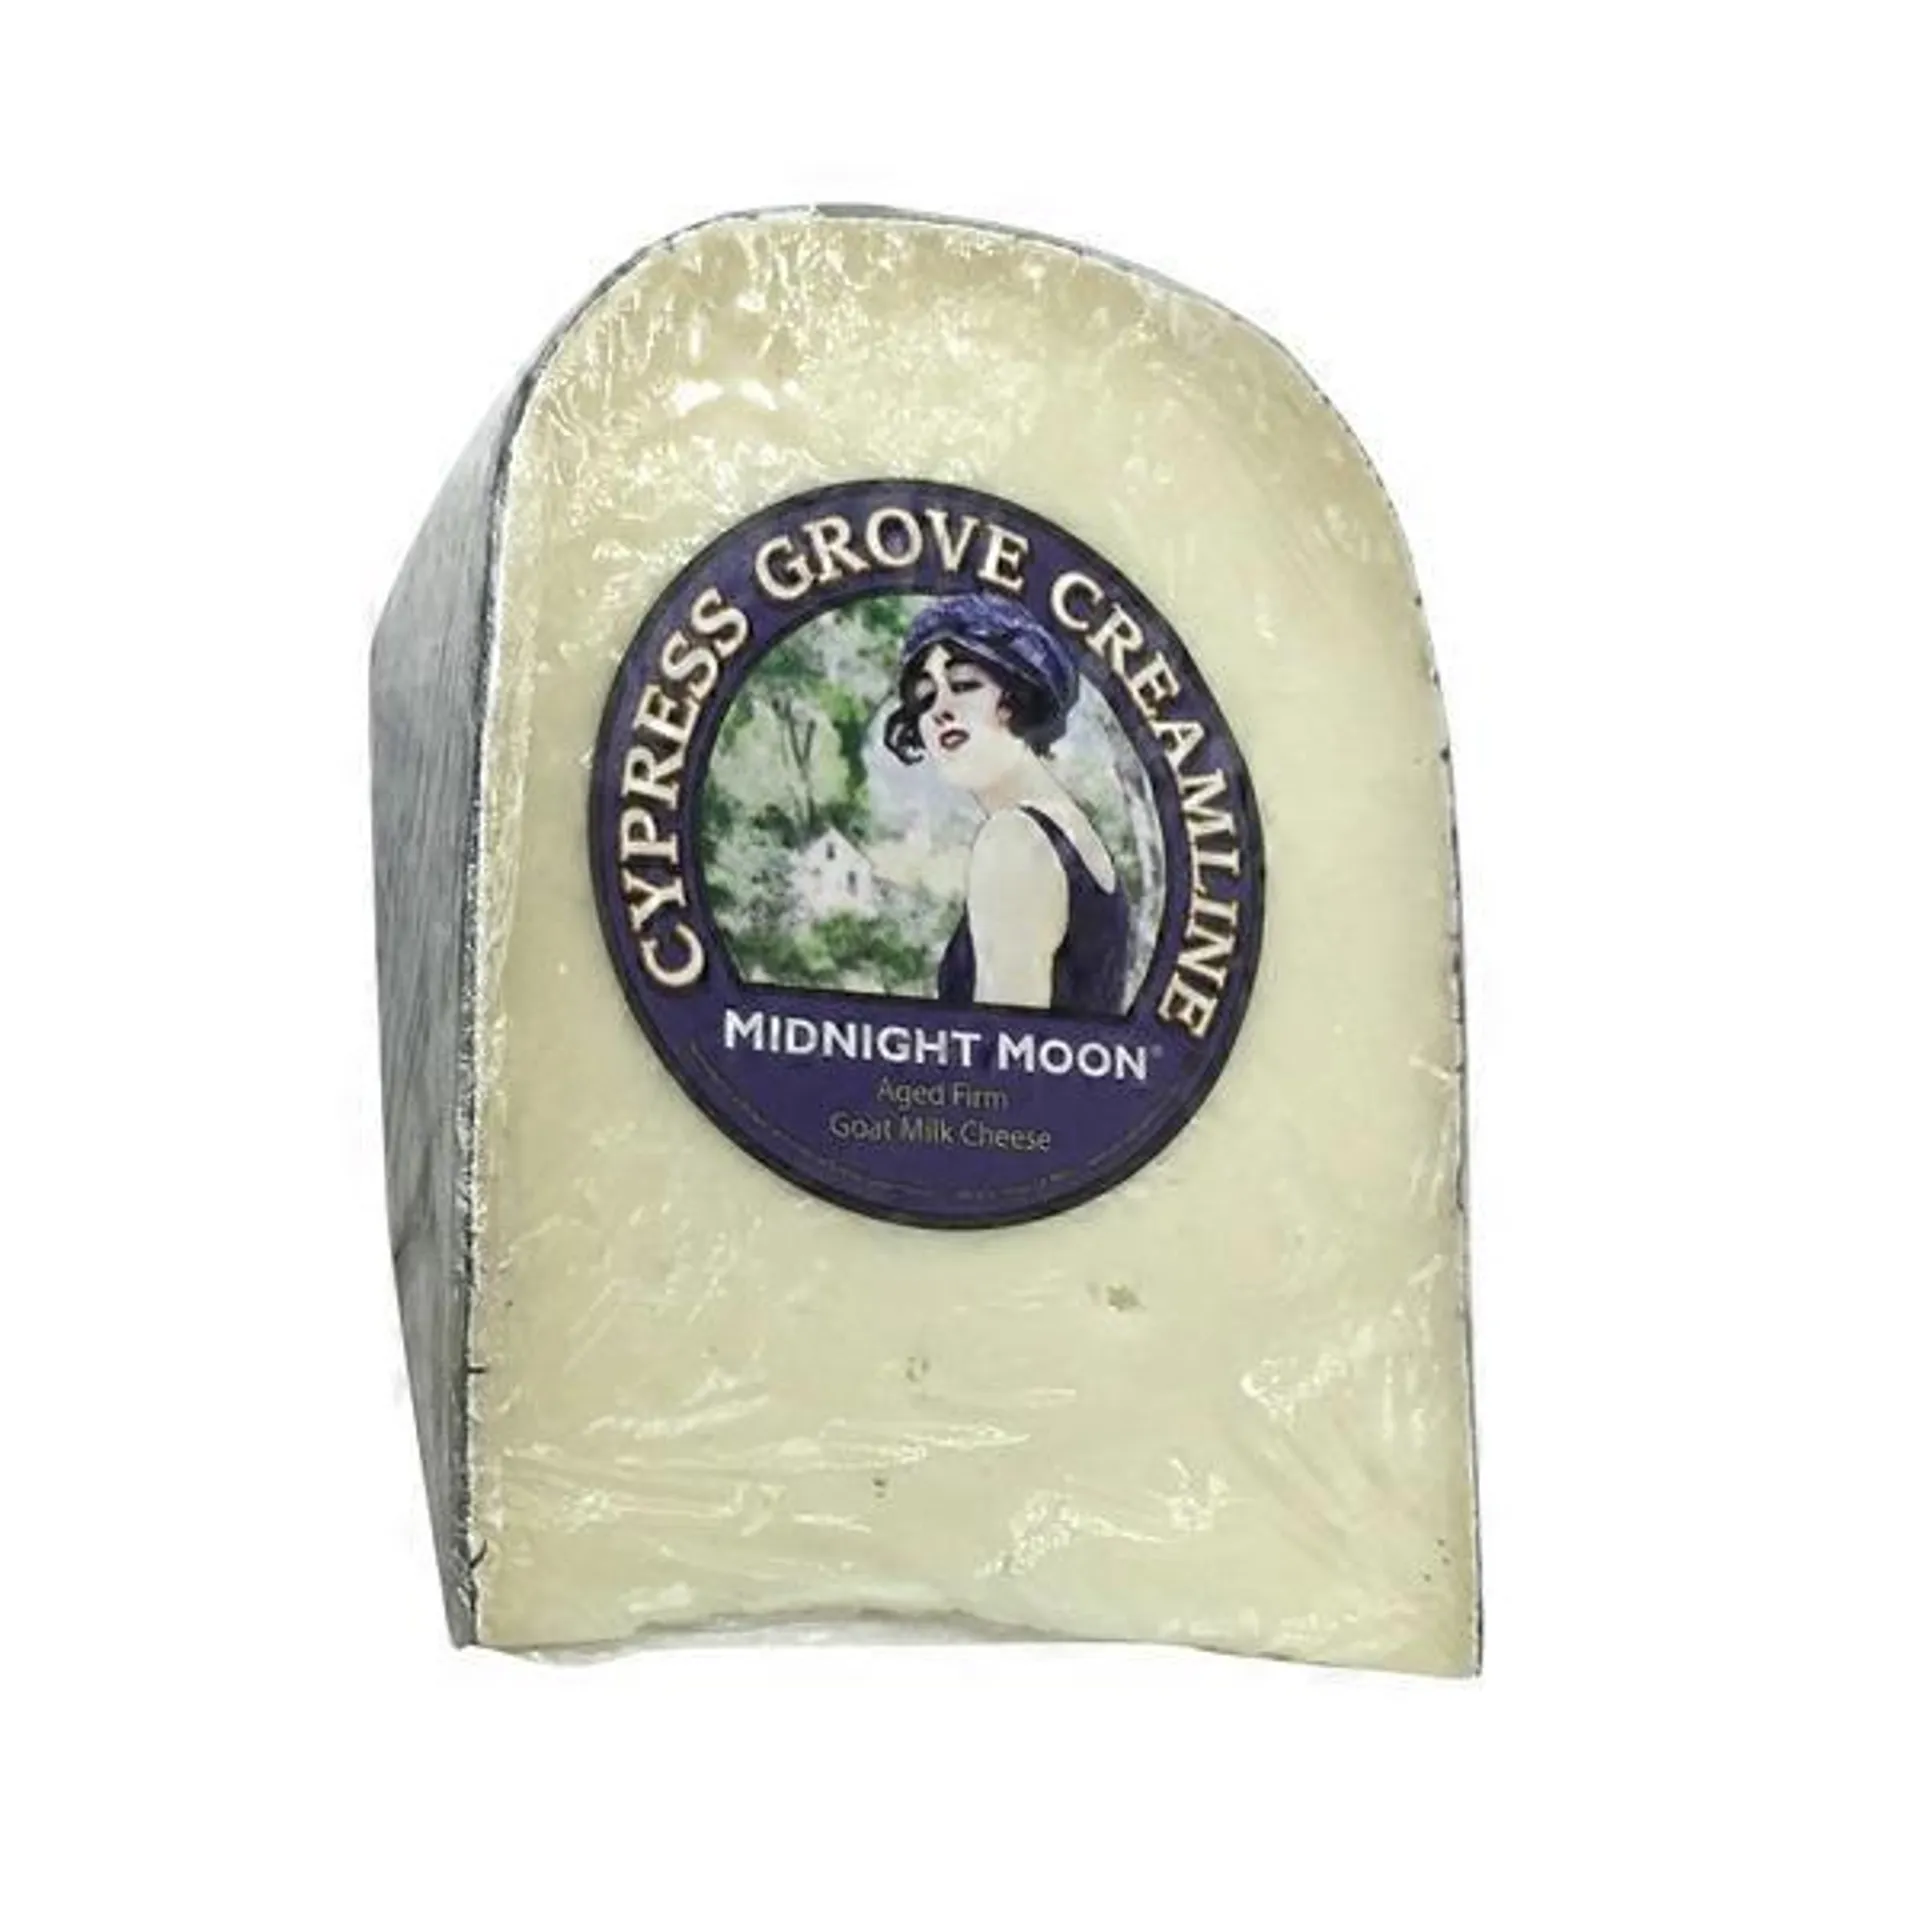 Cypress Grove Midnight Moon Aged Goat Milk Cheese